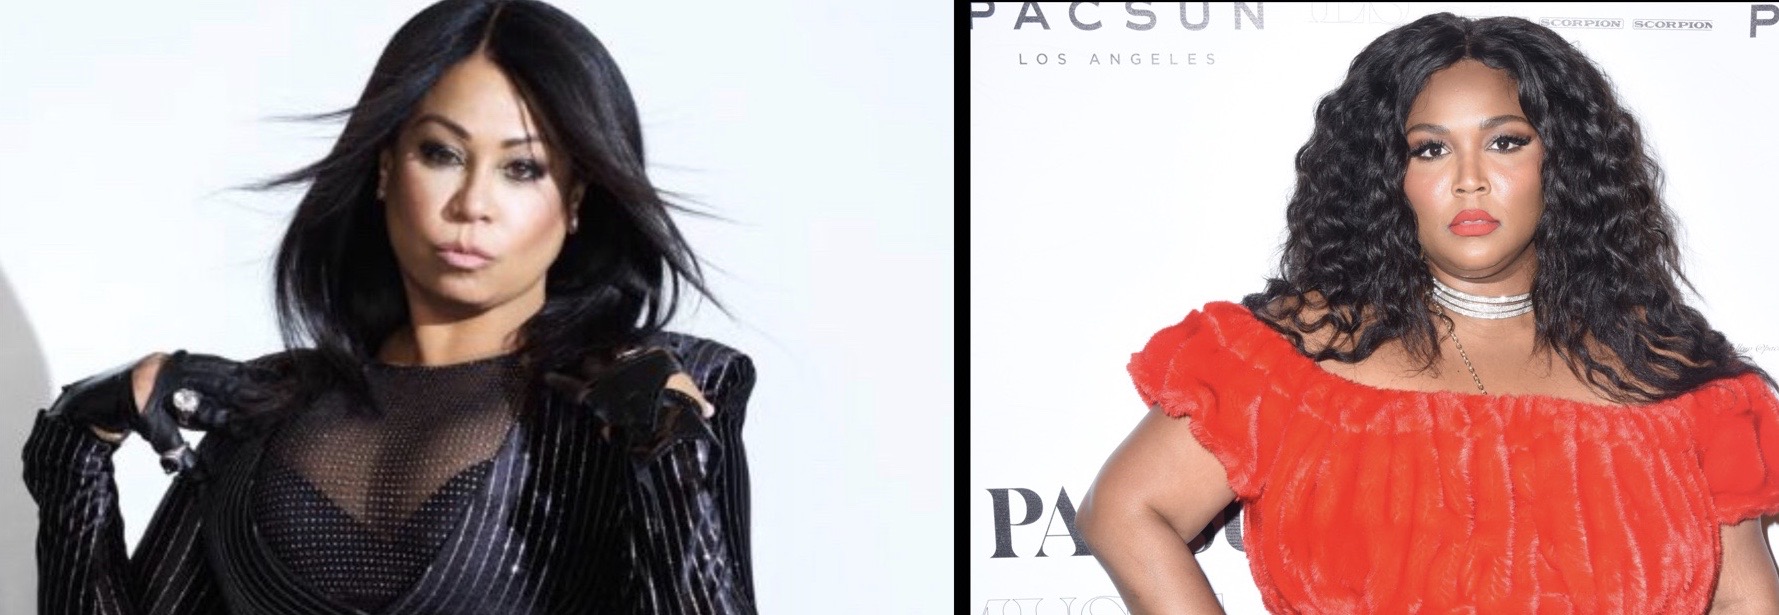  Dance Music Legend CeCe Peniston Accuses Lizzo Of Copyright Infringement On Hit Single “Juice”